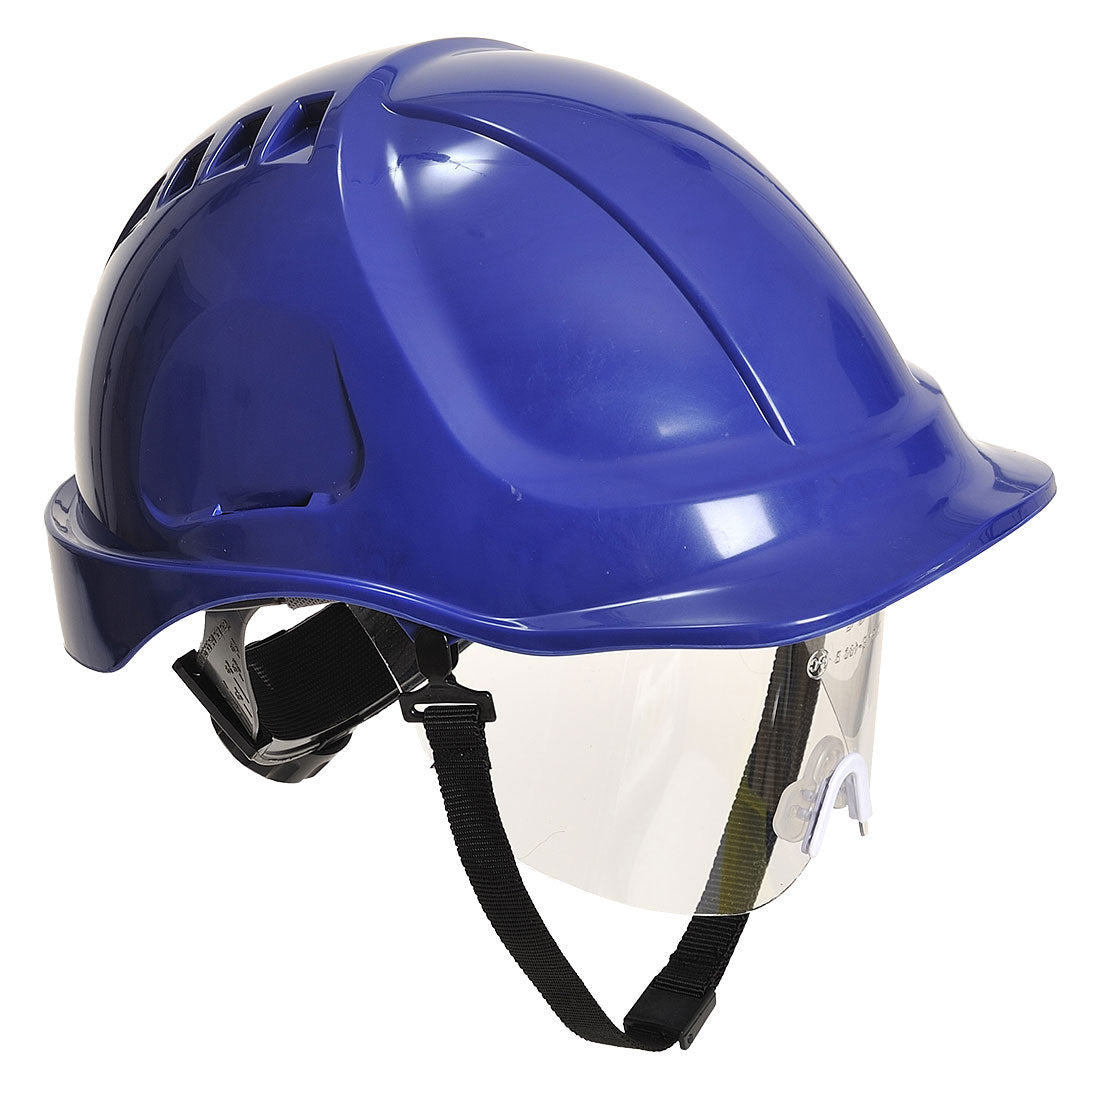 Portwest PW54 Endurance Plus Visor Helmet - Royal Ble